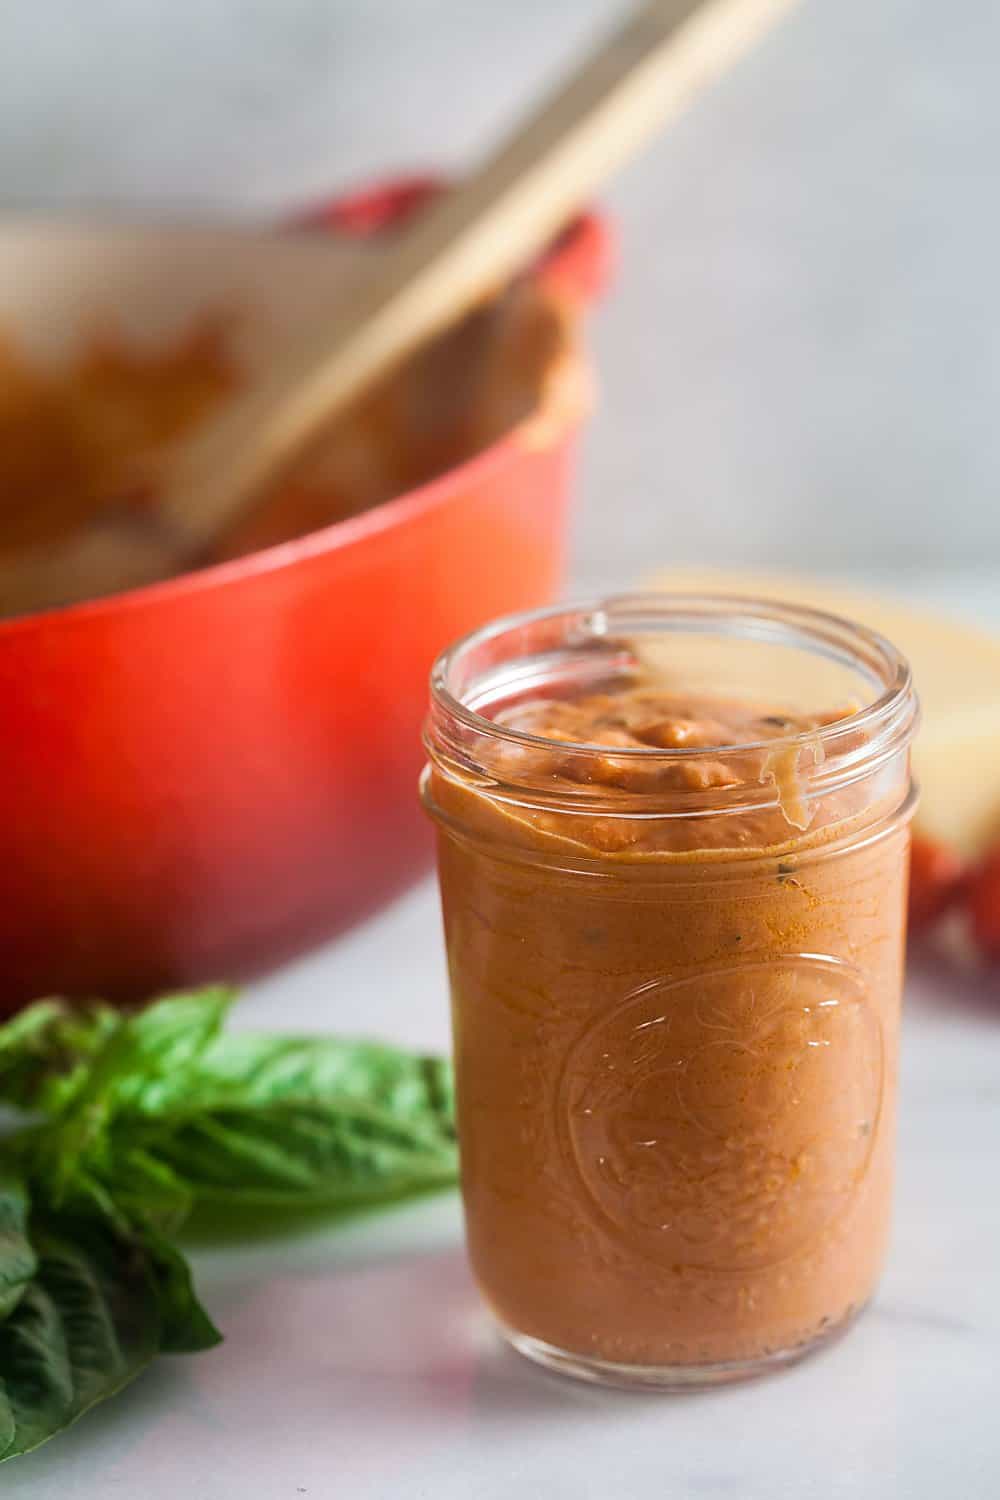 A ball jar of homemade pink sauce/tomato cream sauce